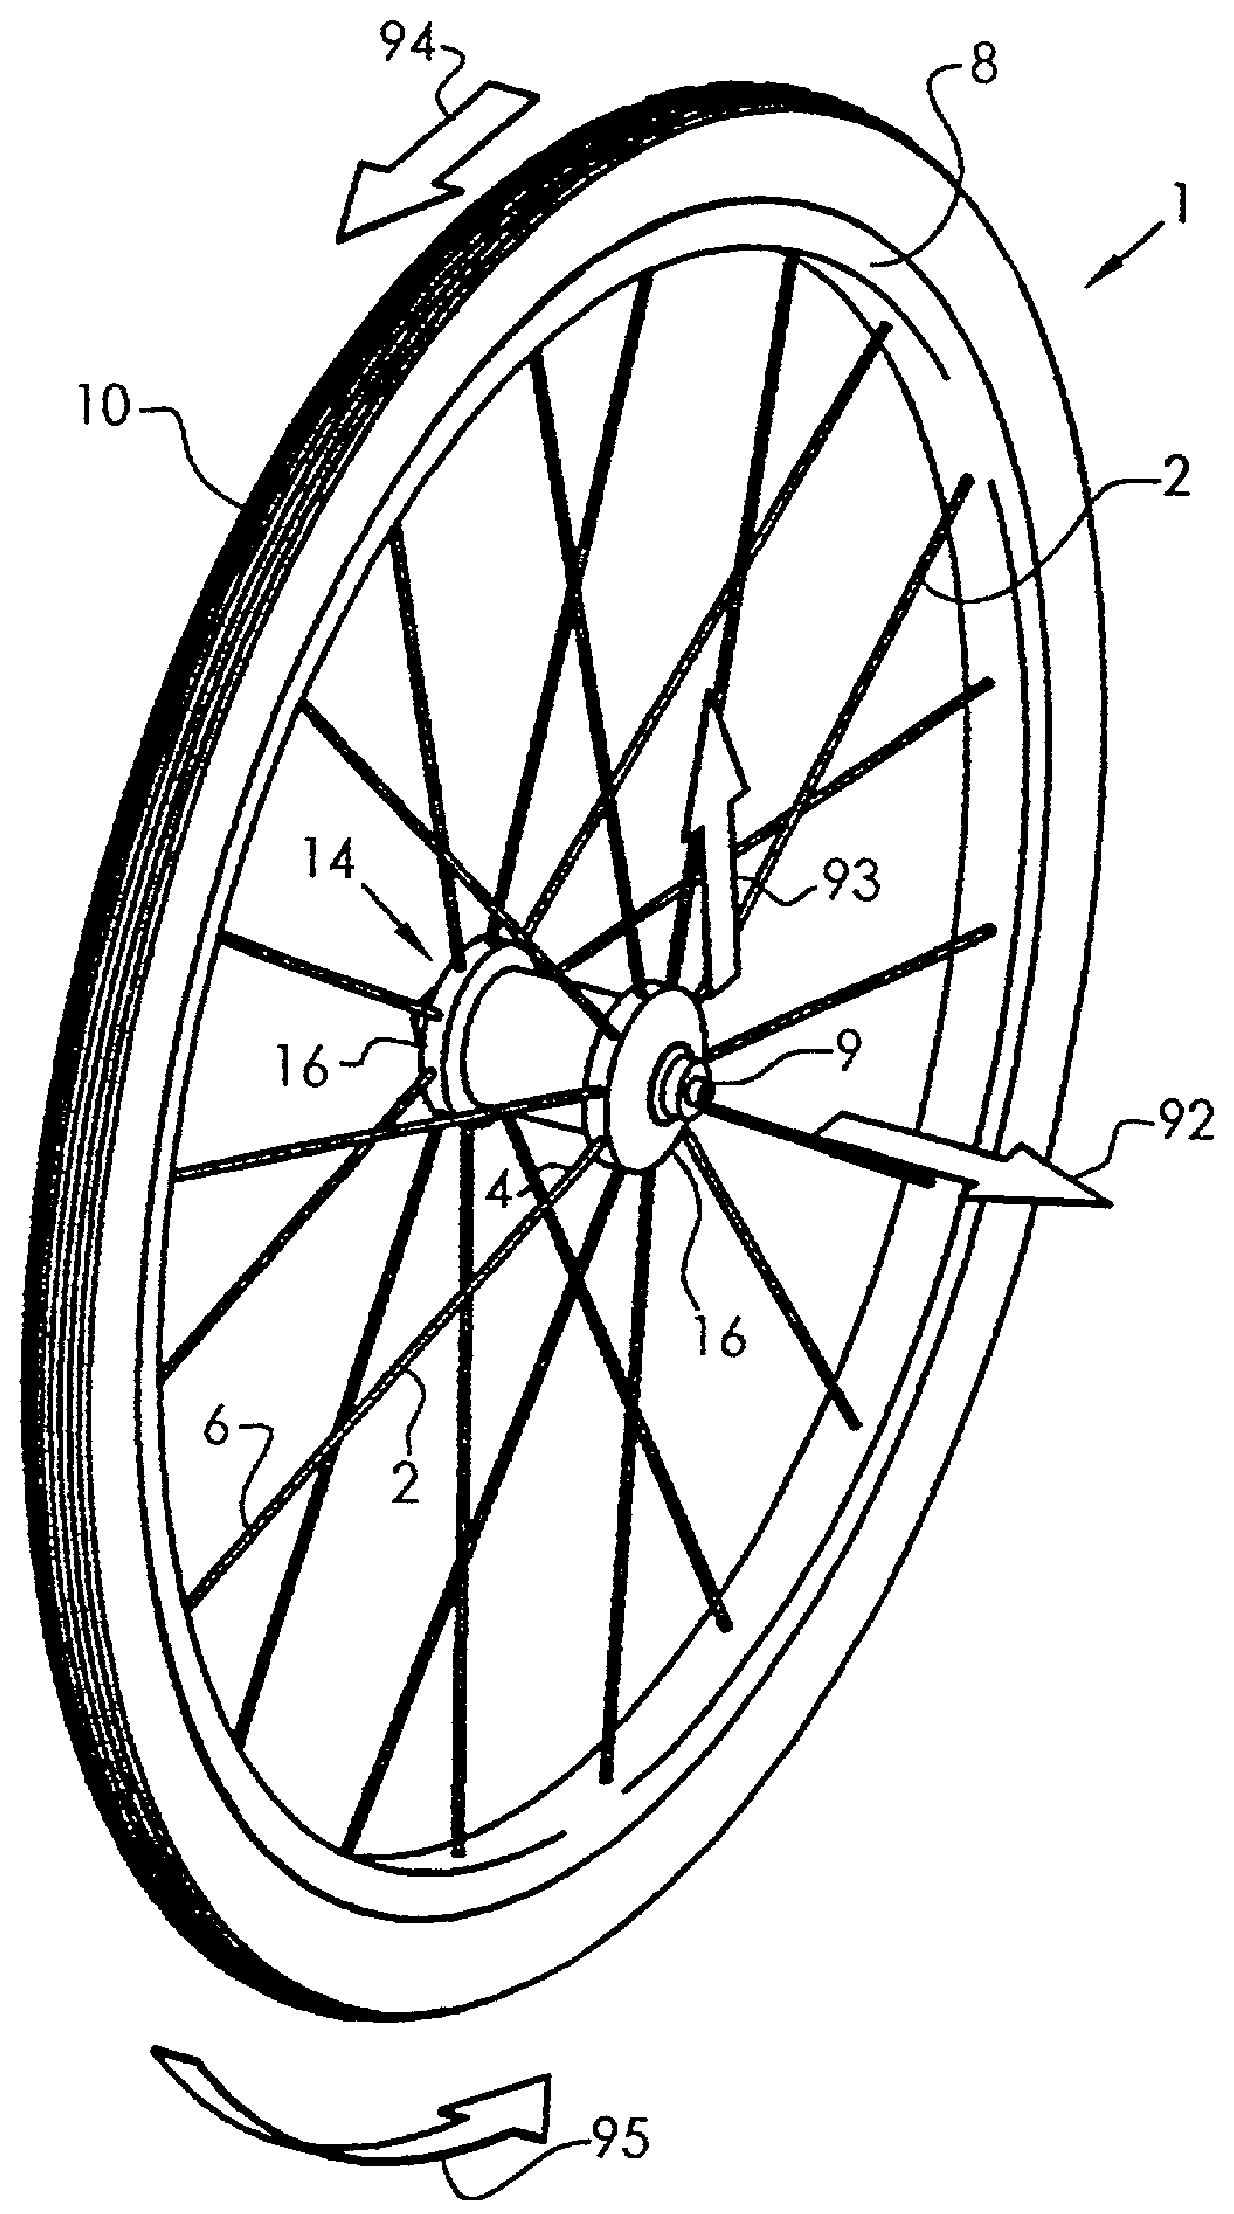 Vehicle wheel including spoke attachment